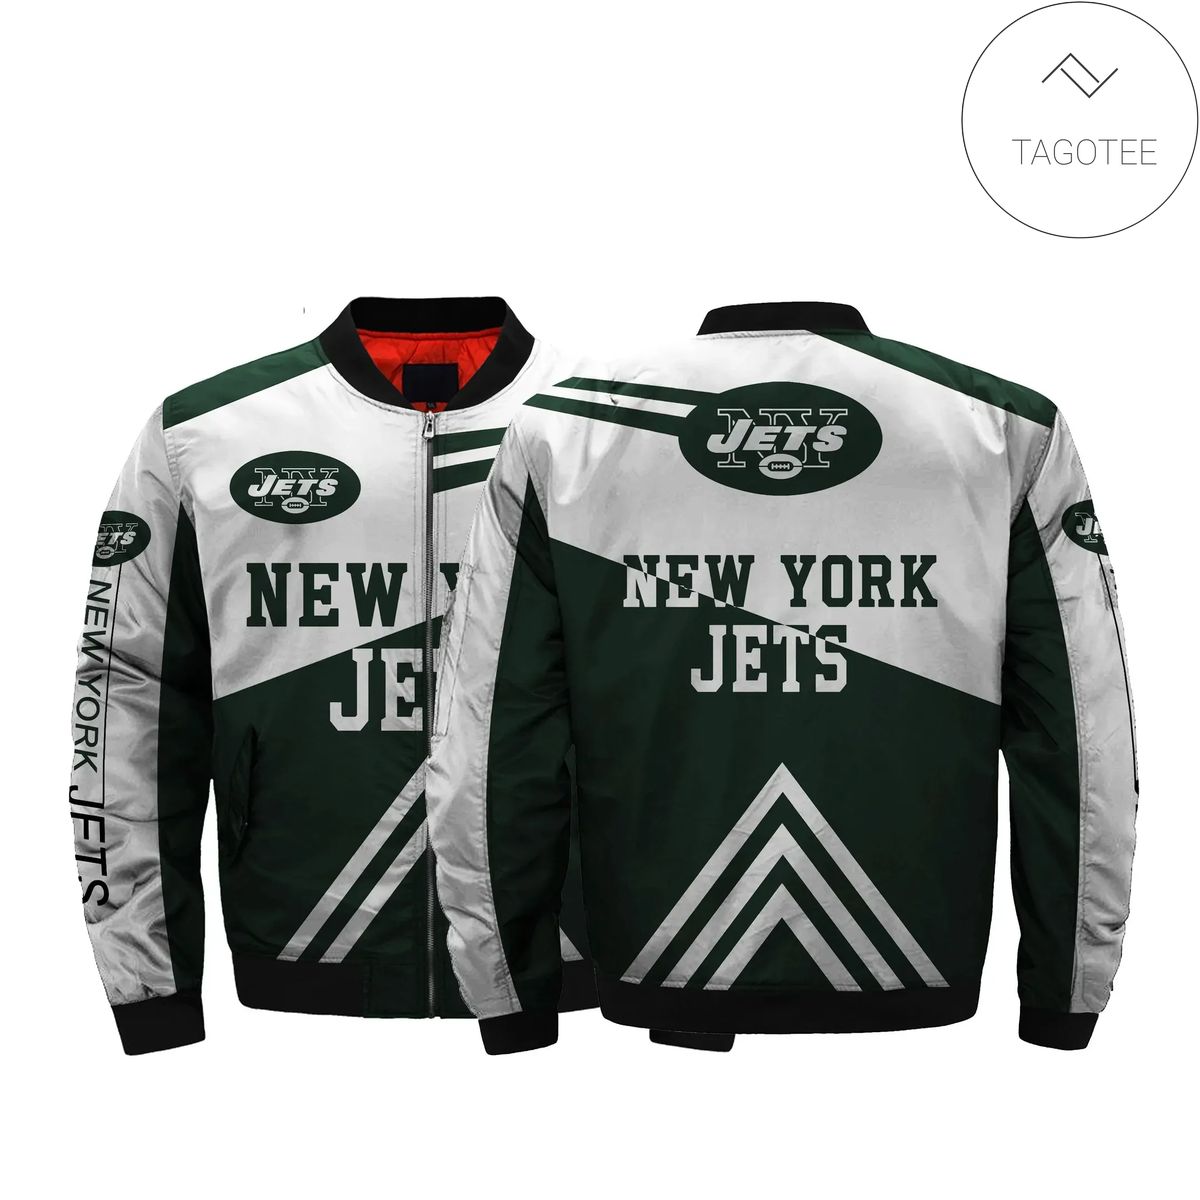 Nfl Jackets Men Cheap New York Jets Bomber Jacket For Sale